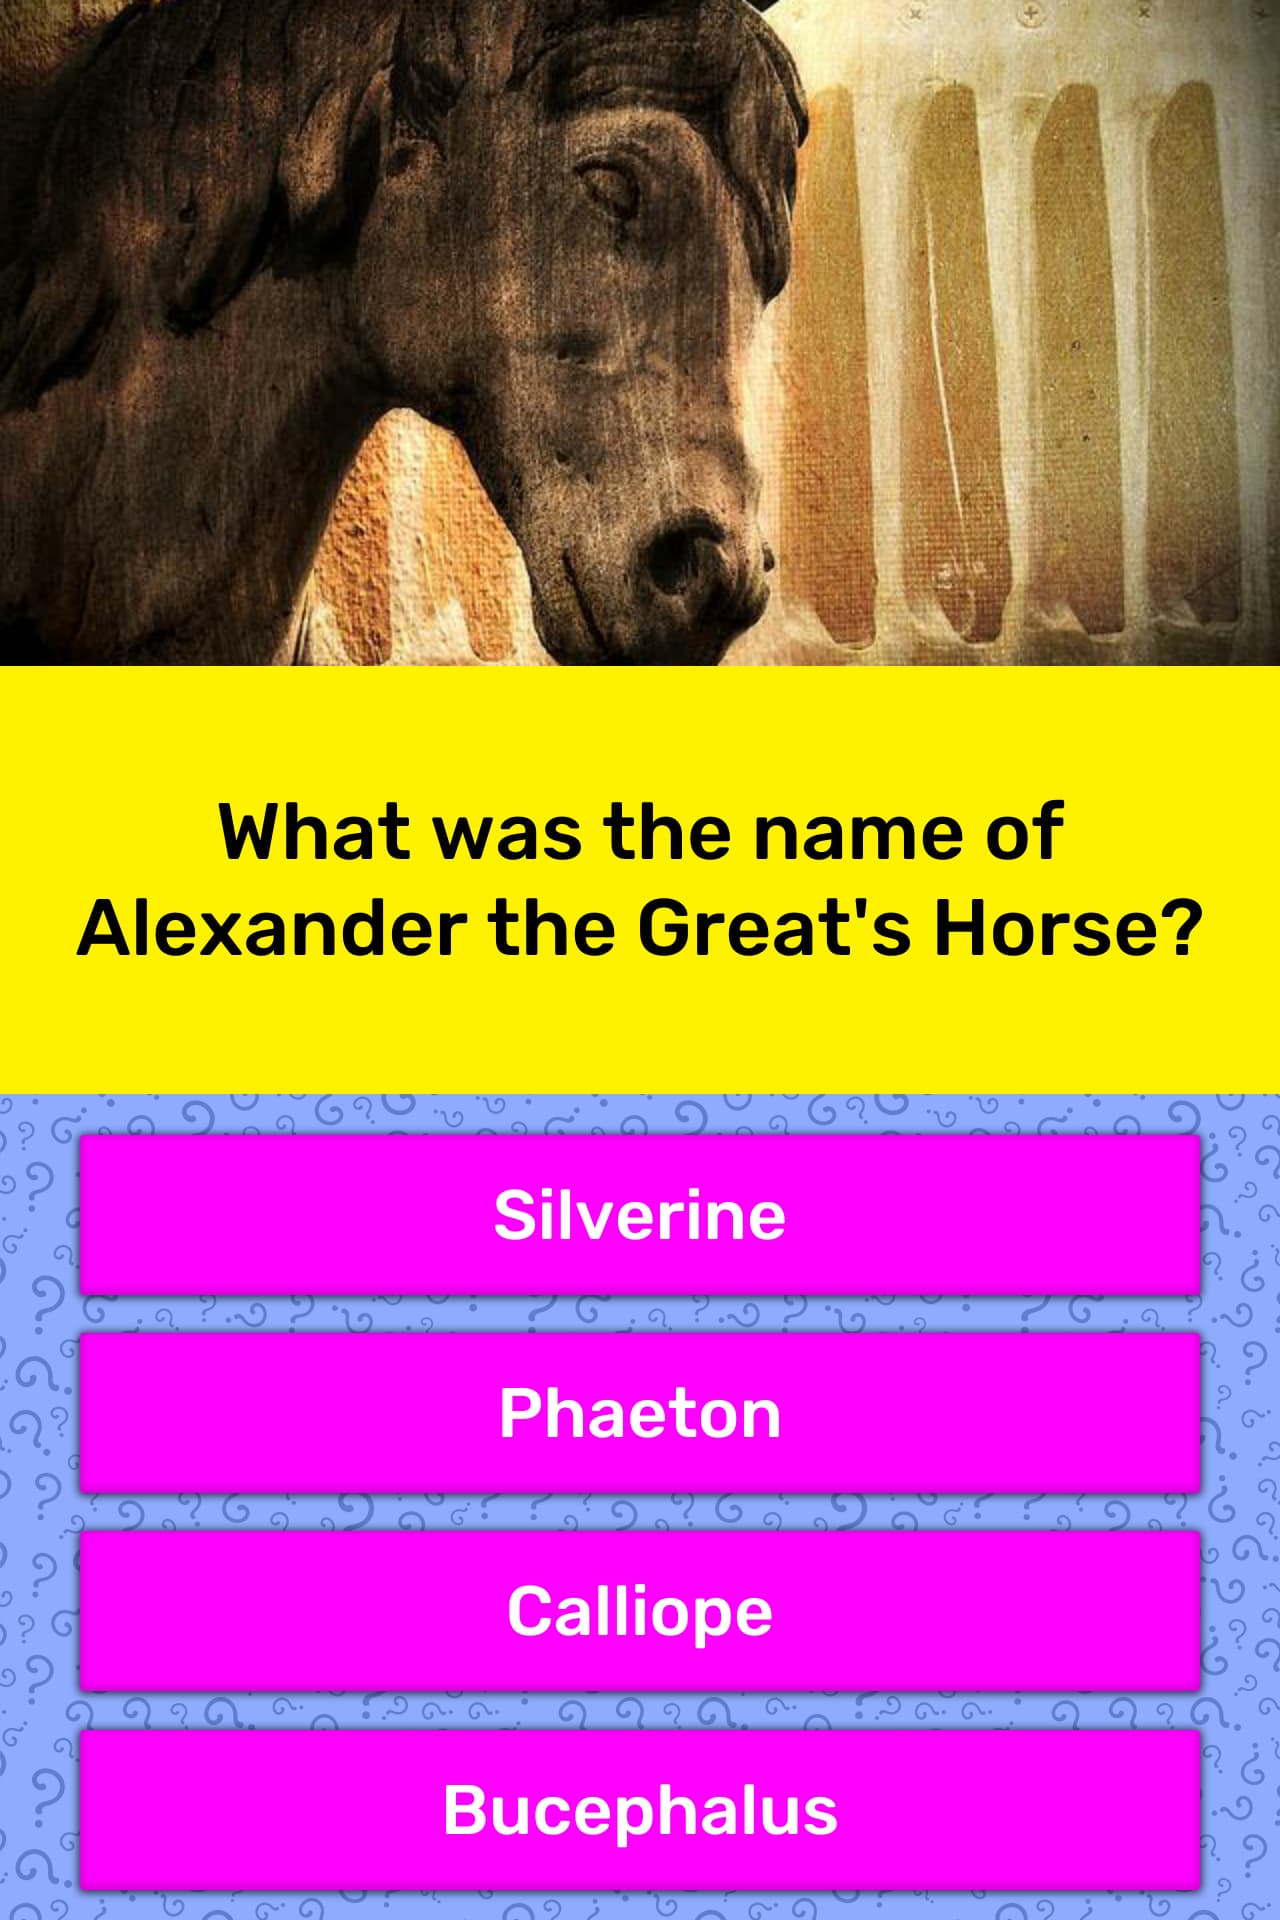 alexander the great nickname